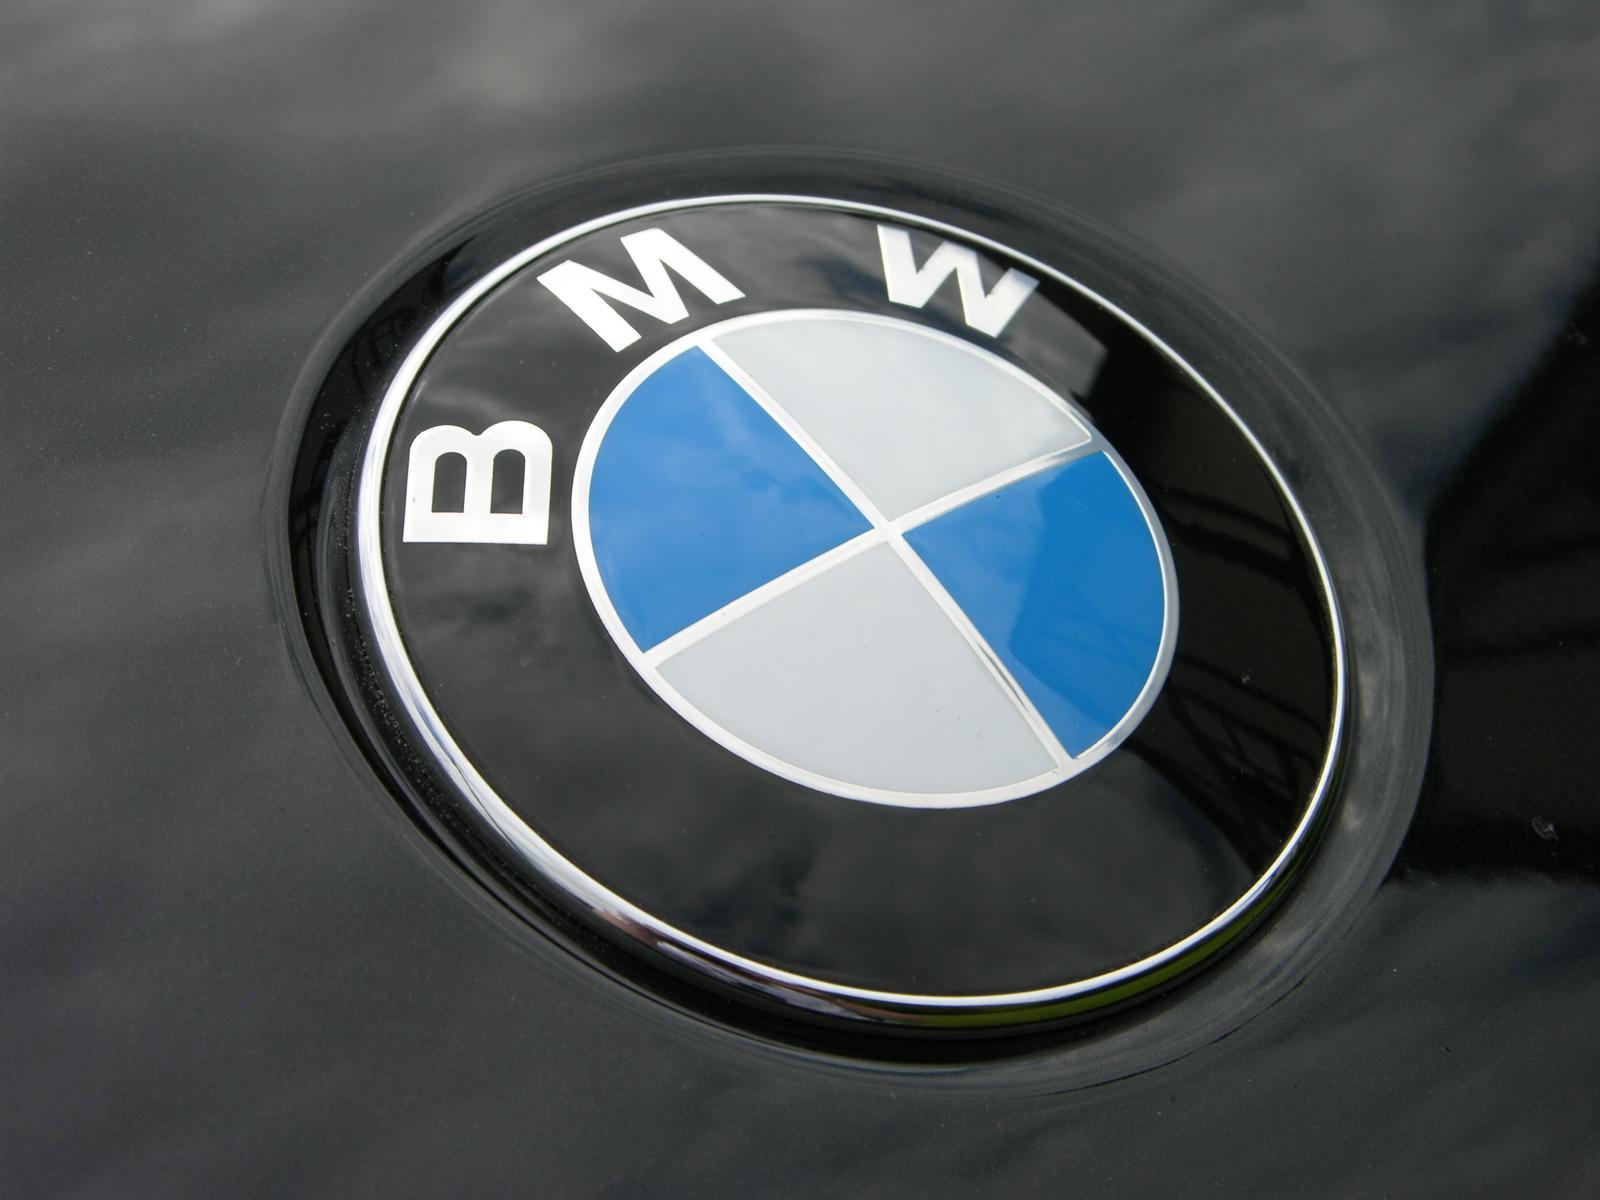 bmw logo wallpaper hd,bmw,emblem,fahrzeug,persönliches luxusauto,auto